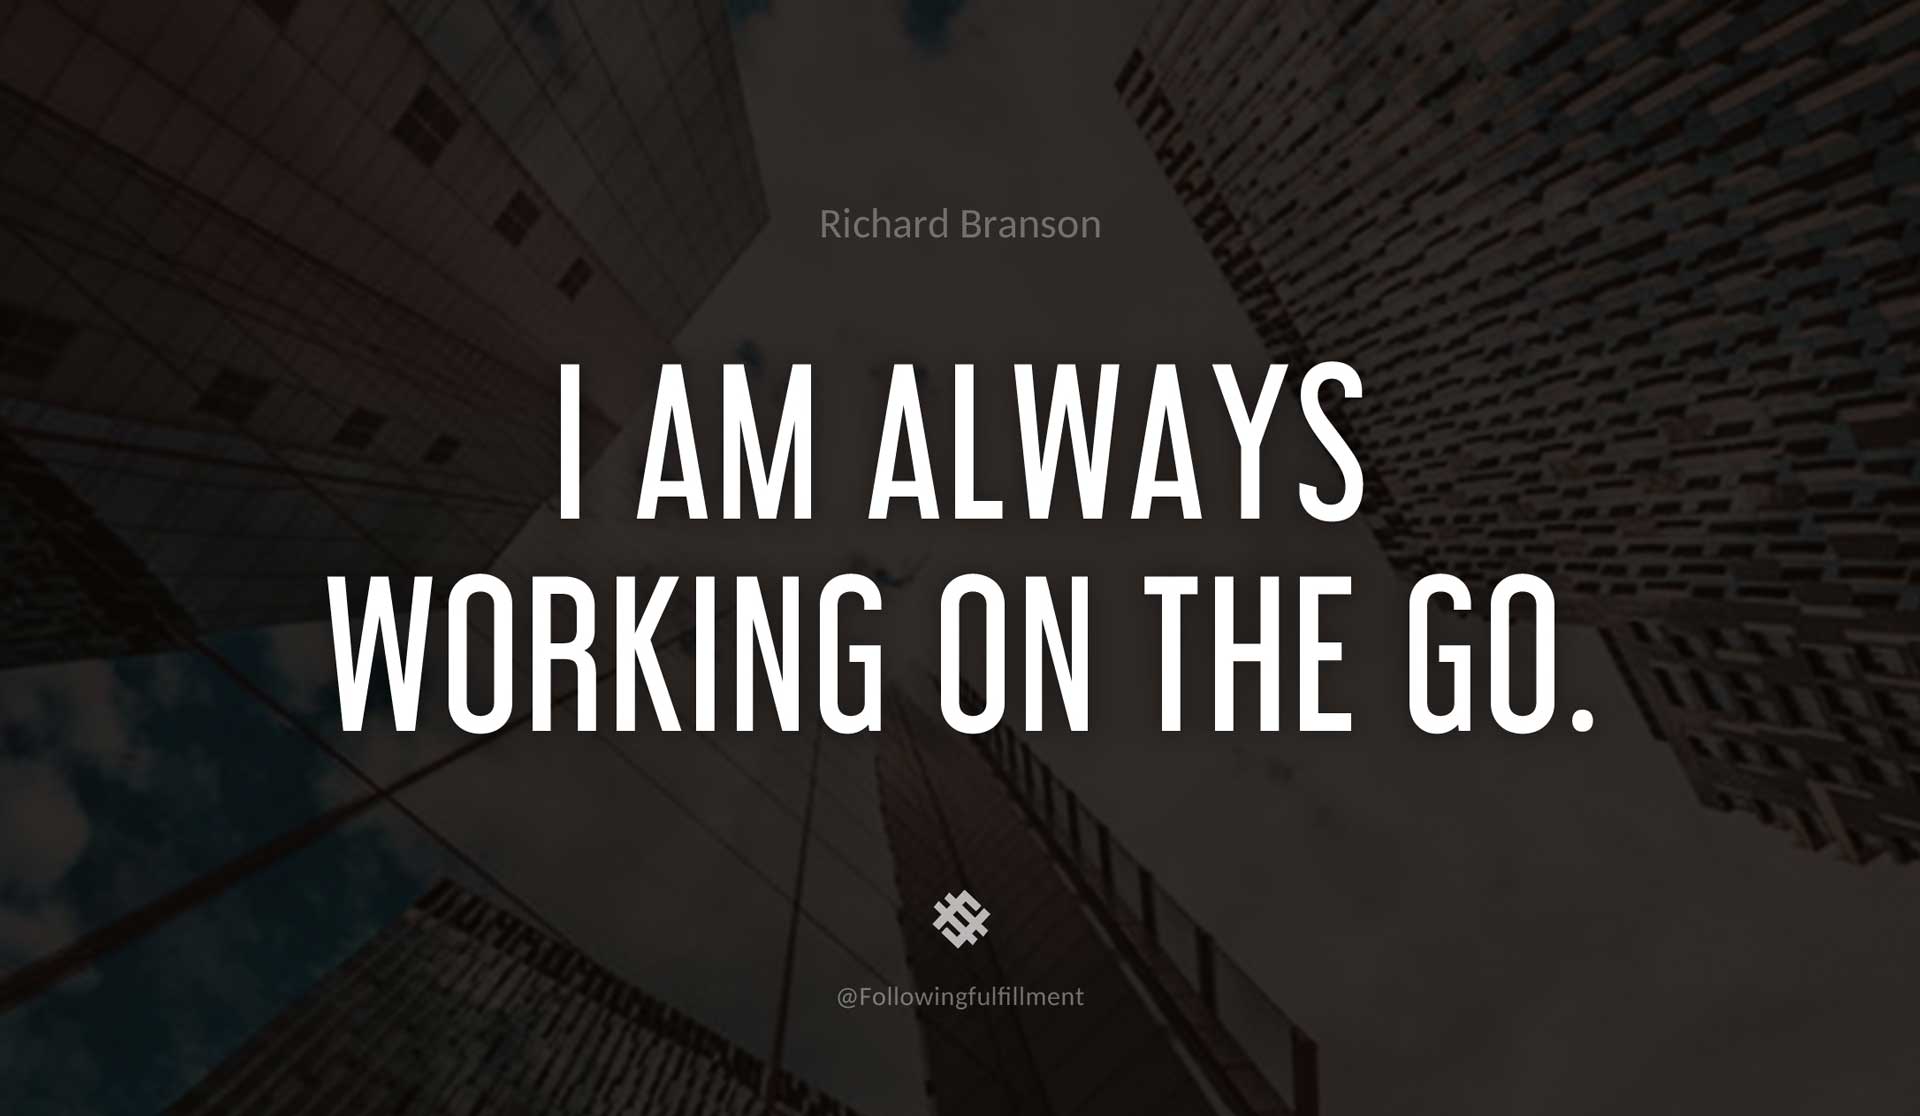 I-am-always-working-on-the-go.-RICHARD-BRANSON-Quote.jpg